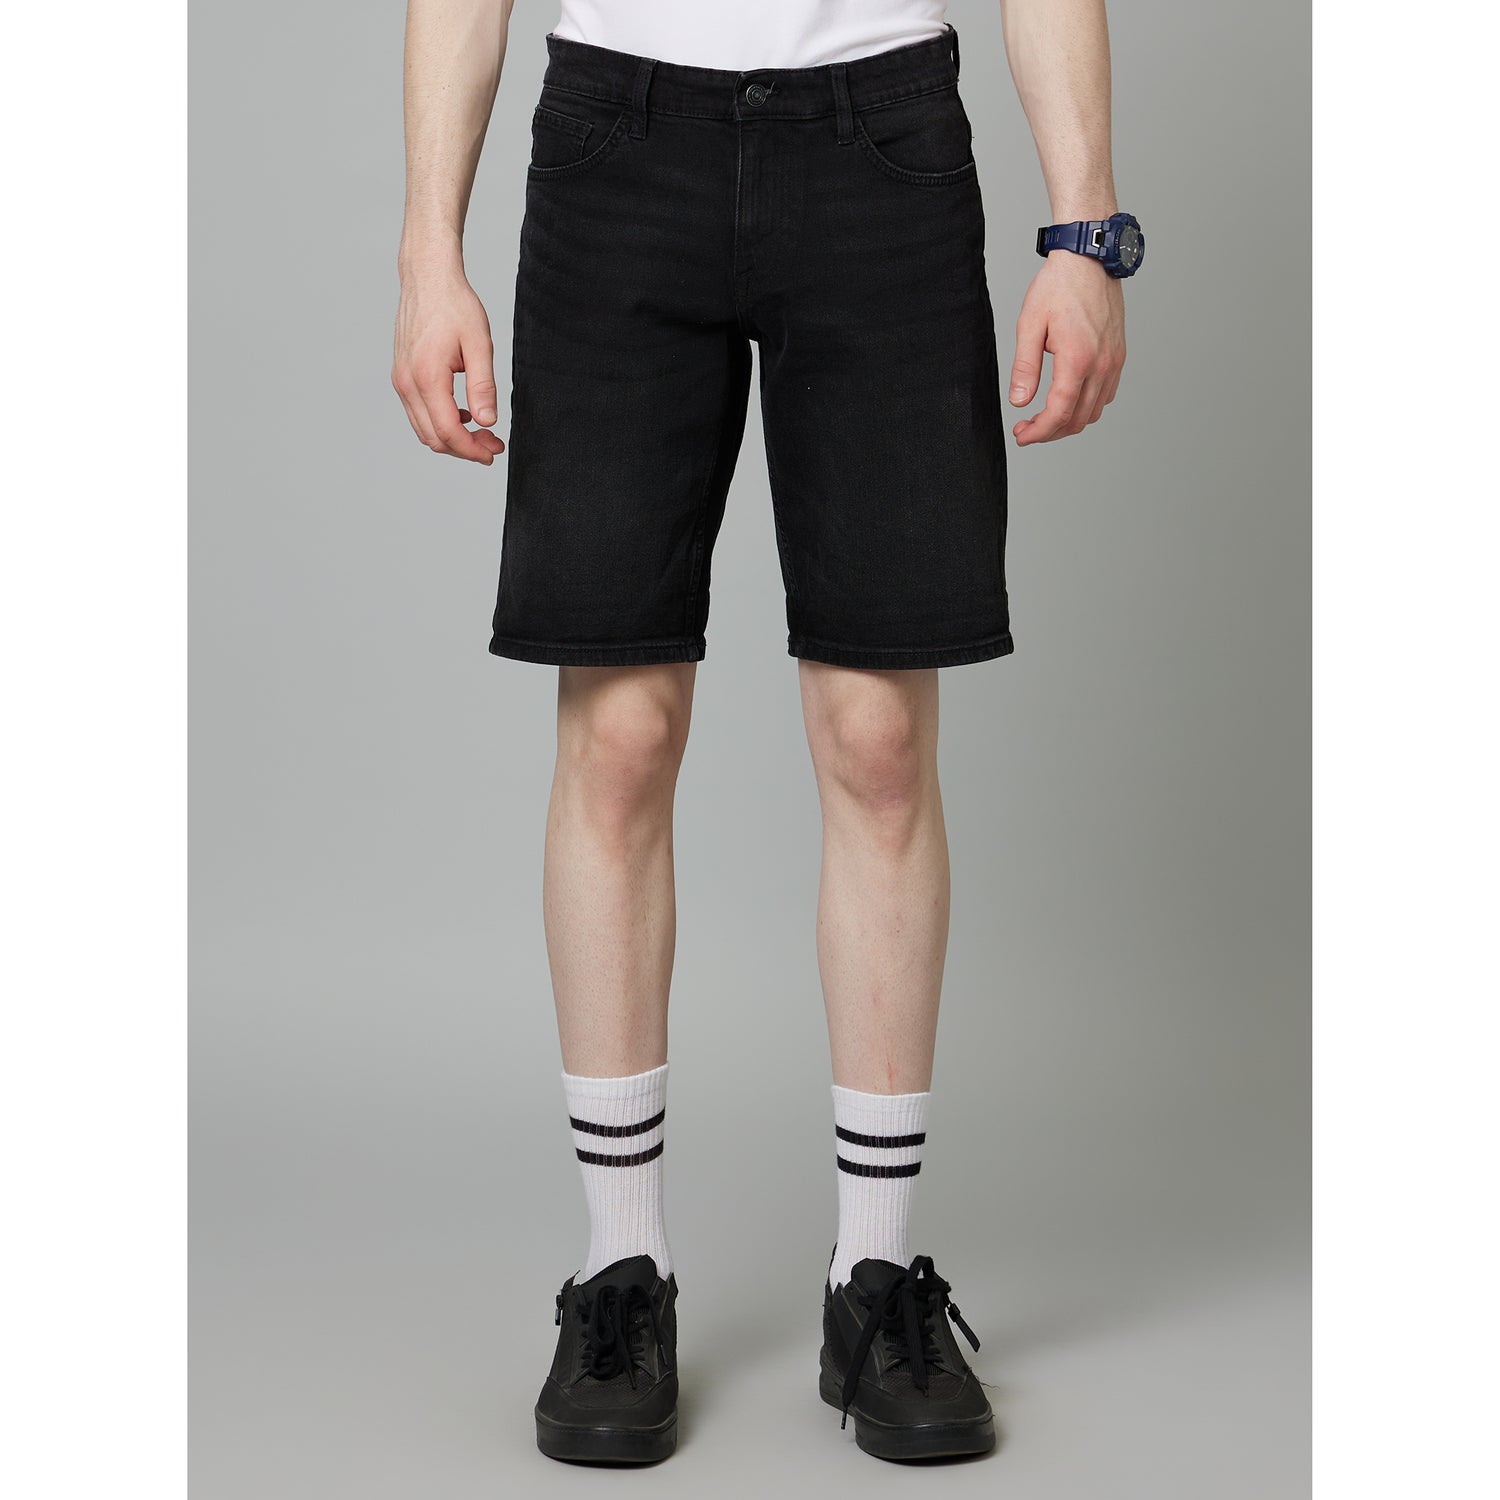 Black Solid Mid-Rise Cotton Denim Shorts (DOFIRSTBM)